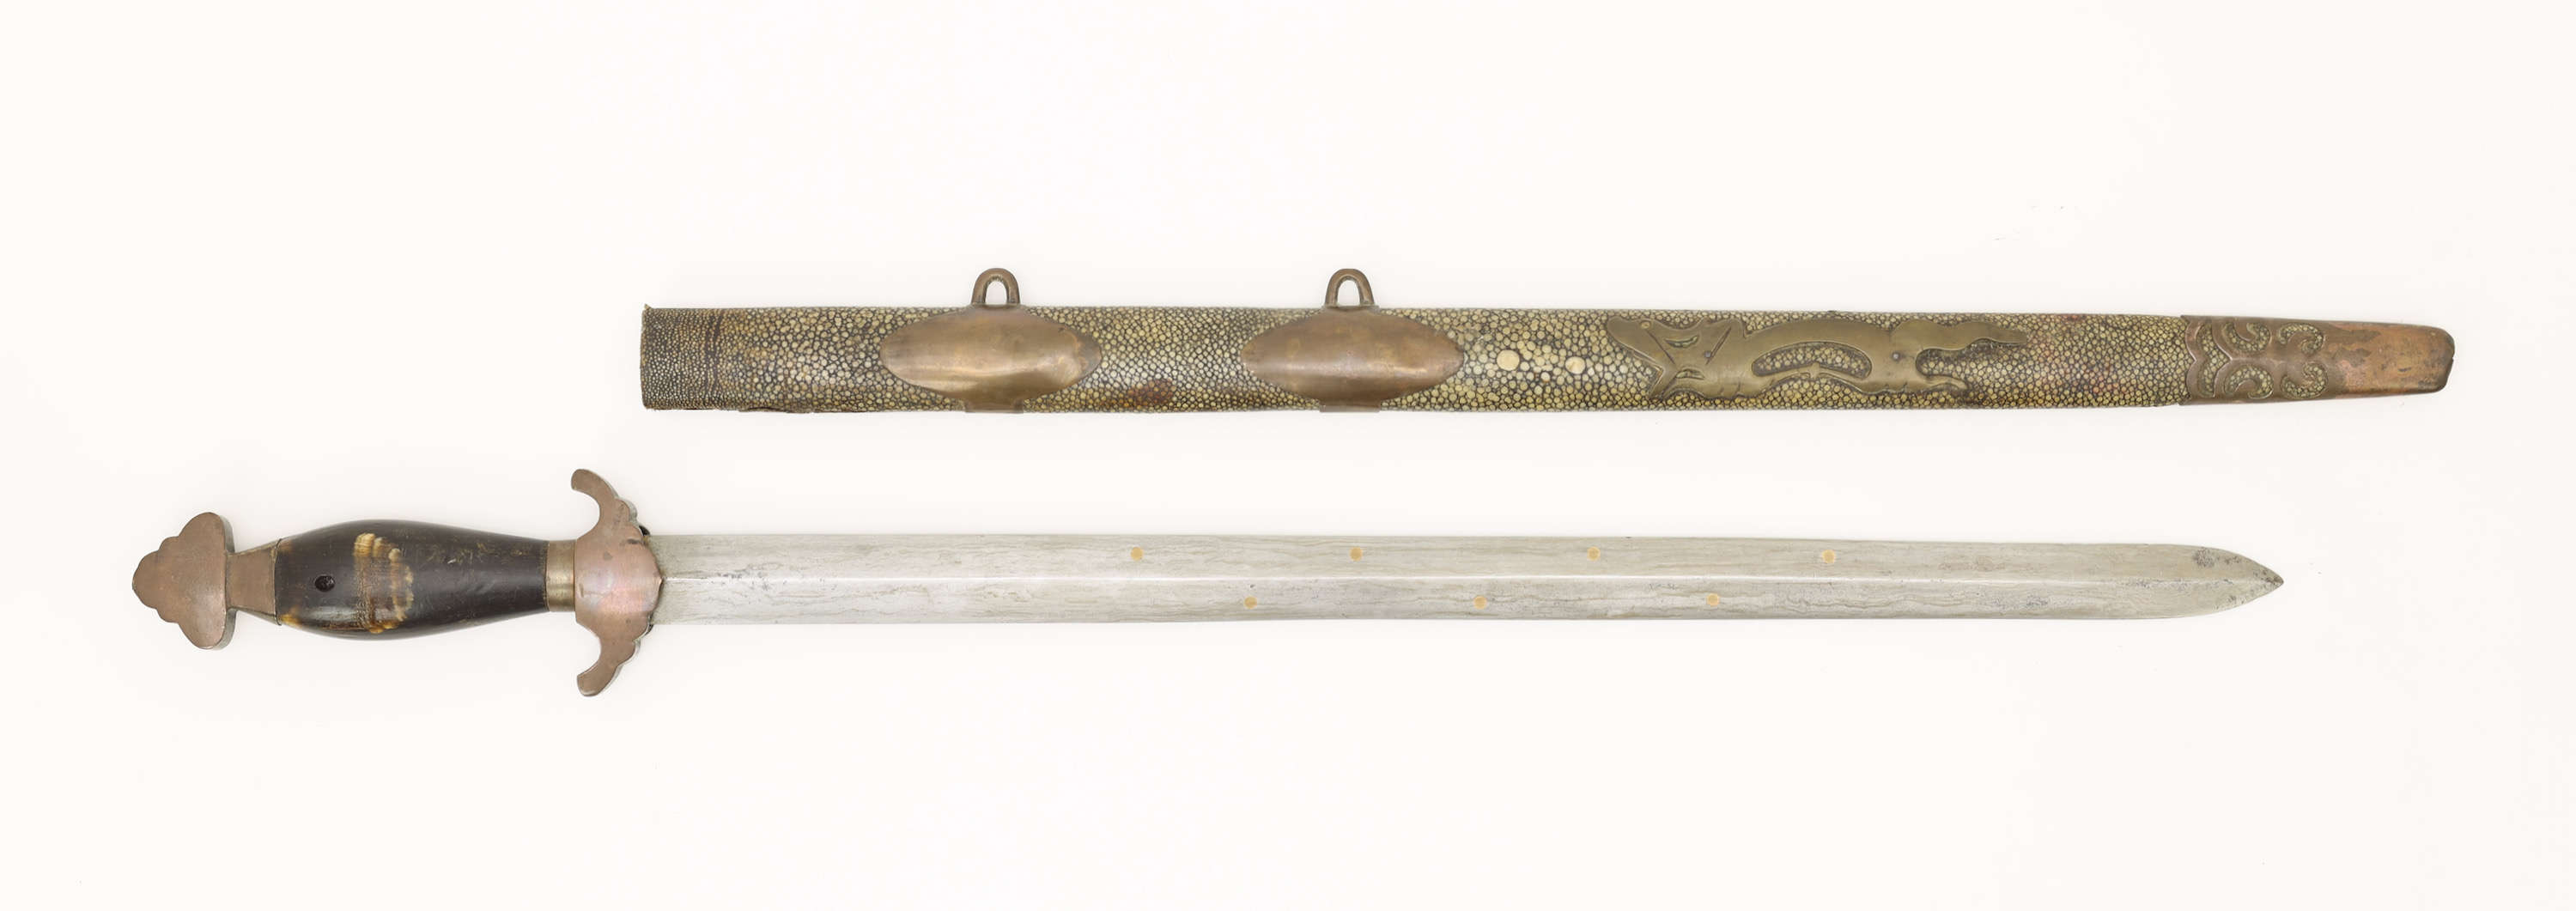 Antique Chinese fighting jian sword